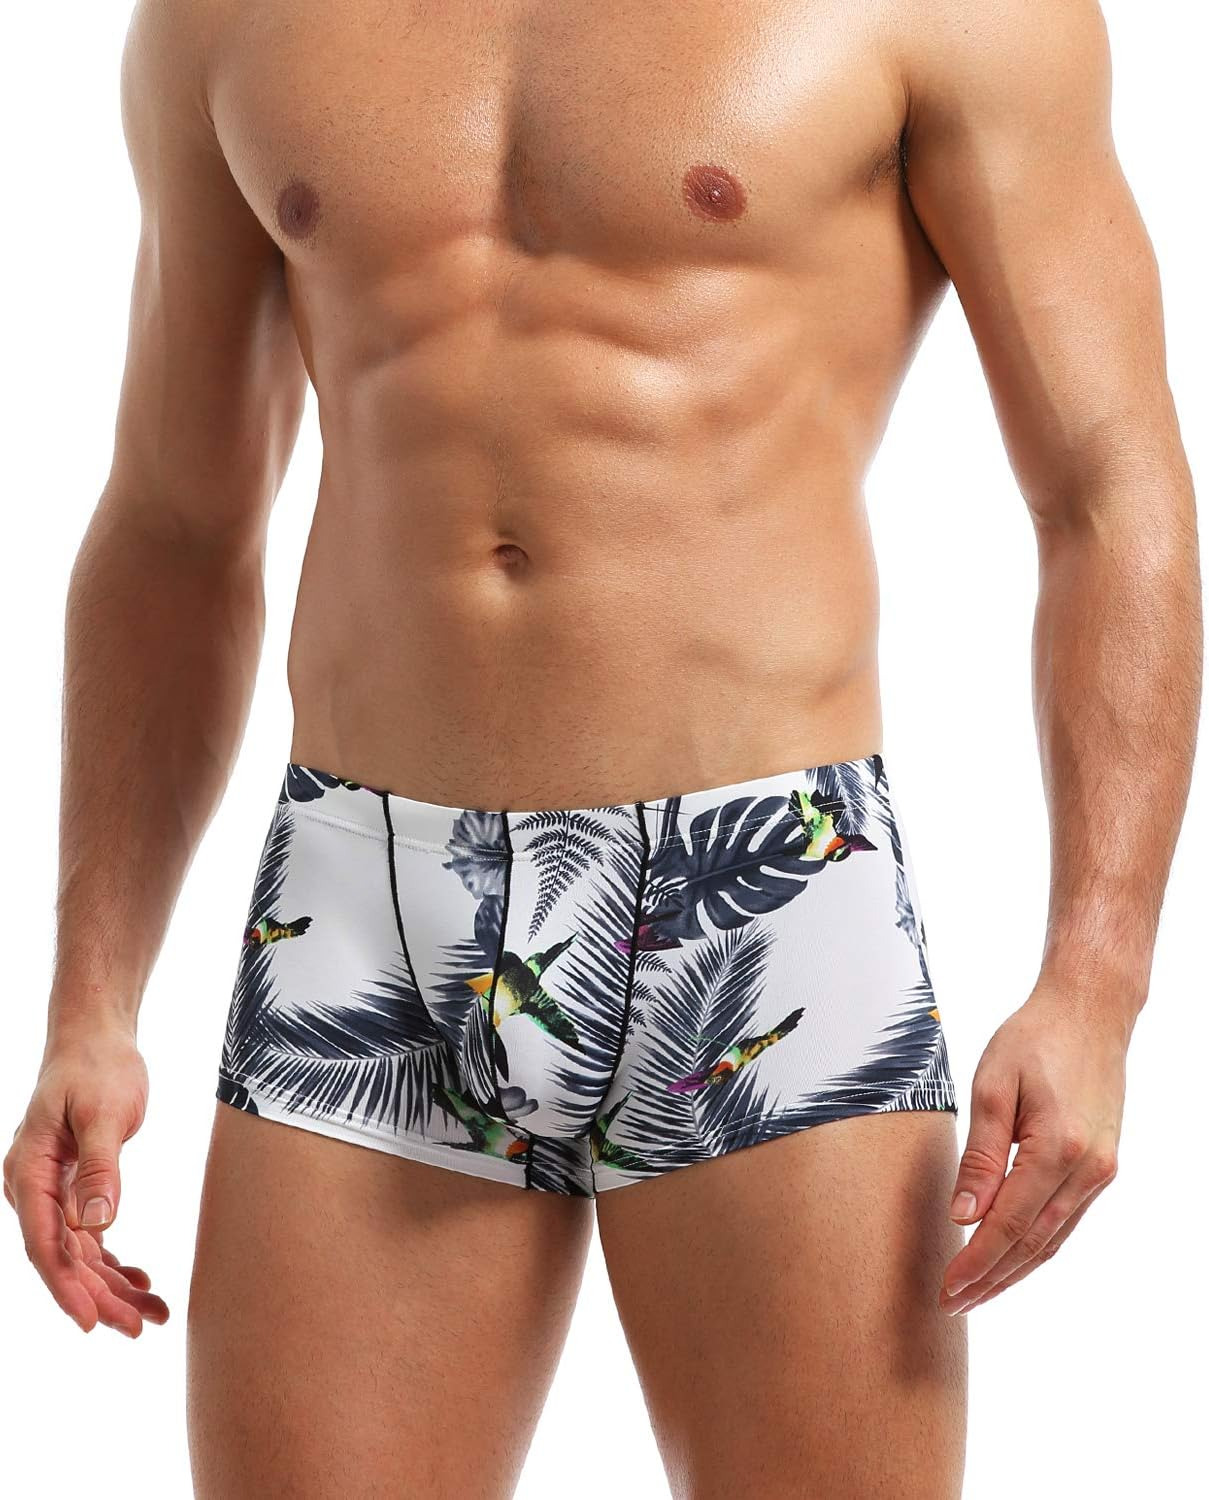 Men'S Sexy Boxer Briefs Underwear Low Rise Soft Trunks Underpants